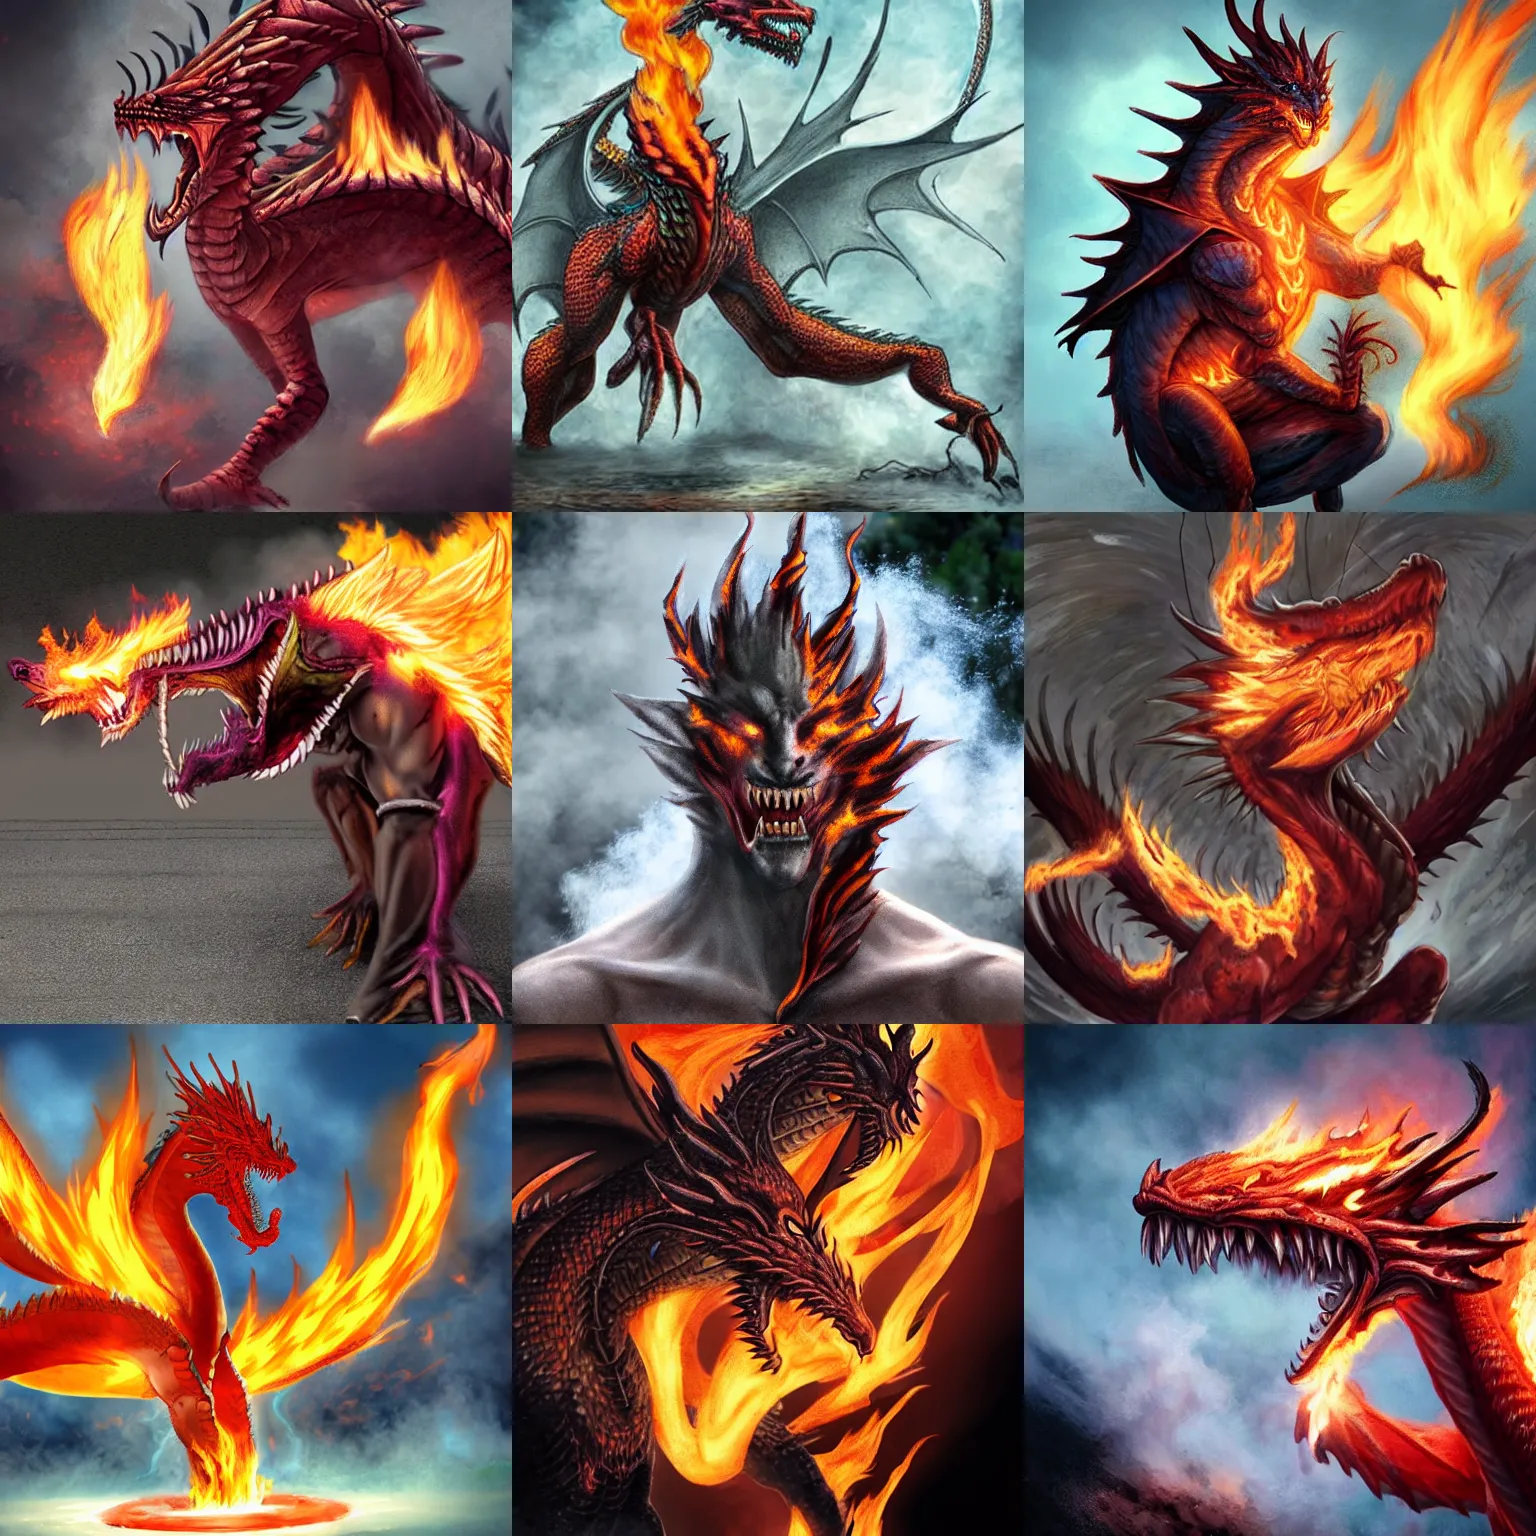 Prompt: human-dragon hybrid spitting fire